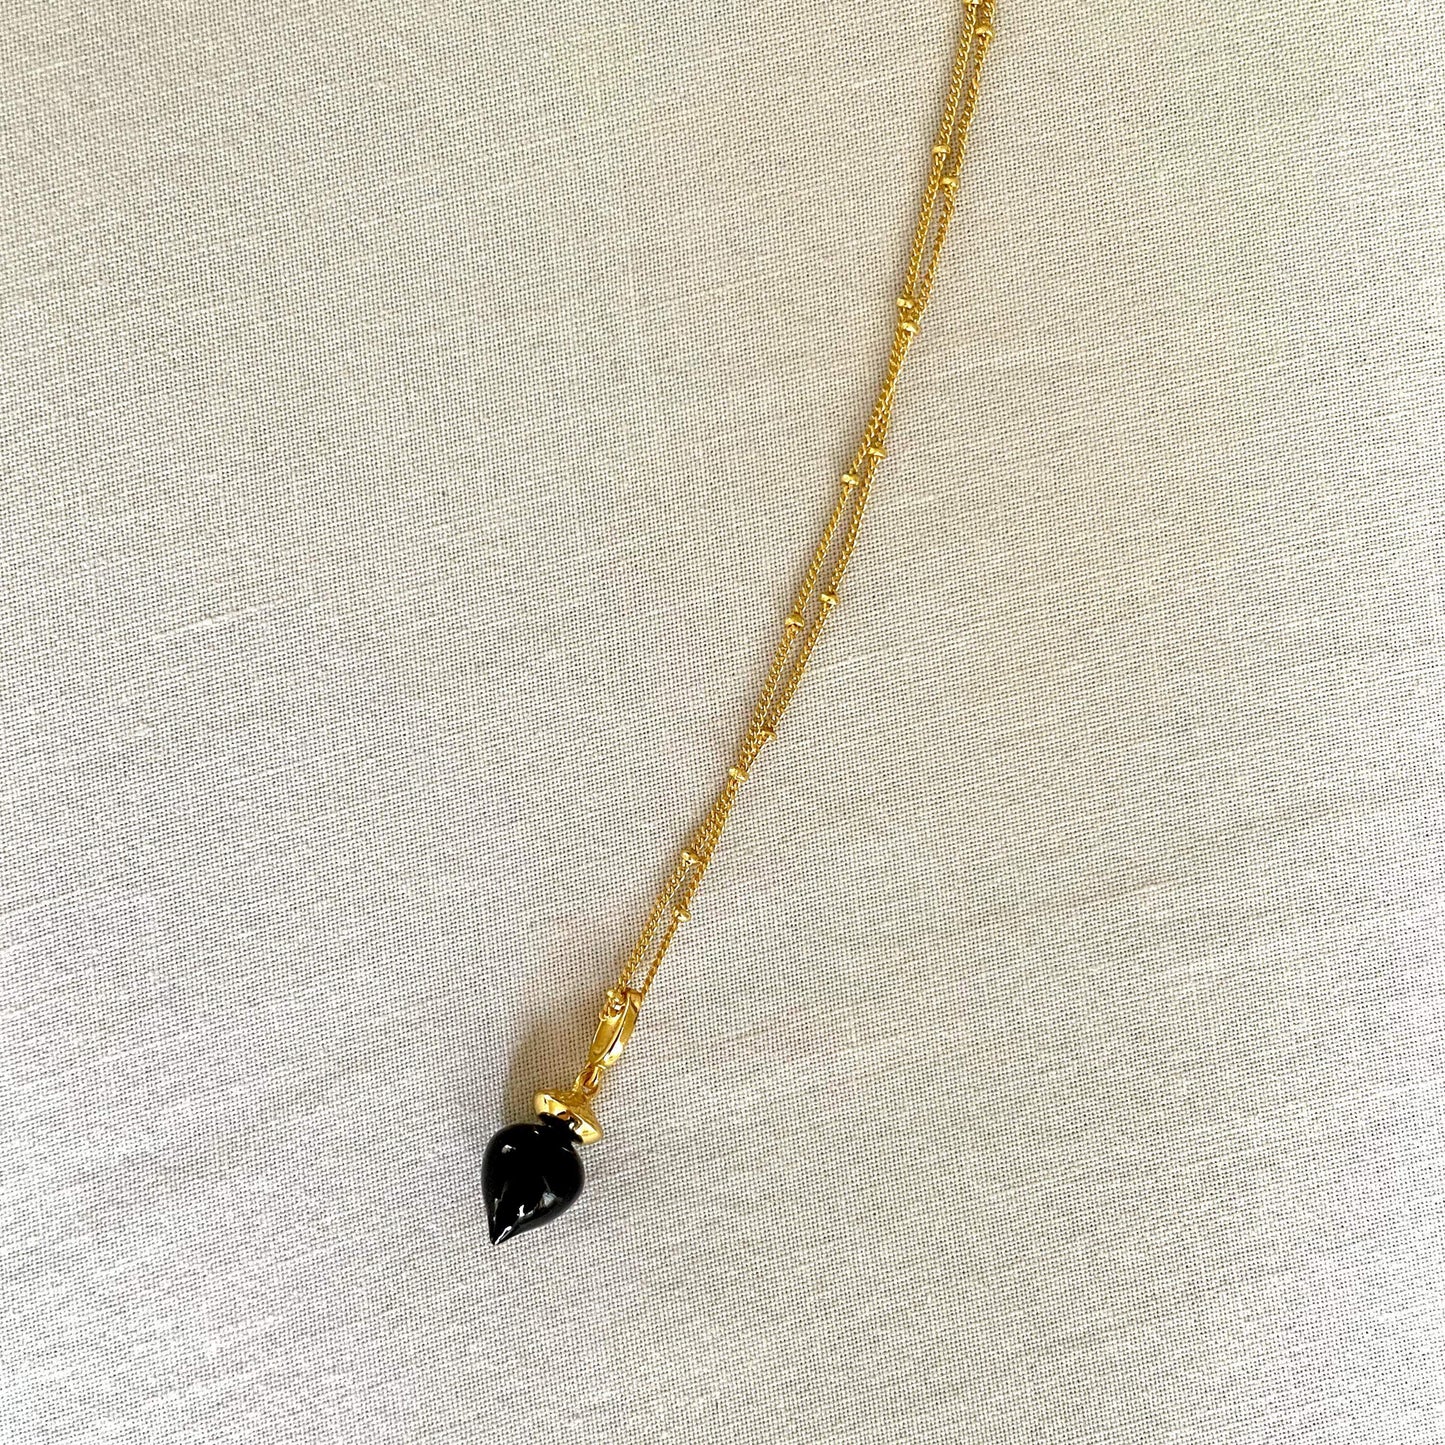 Black Onyx Orb Dome Pendant Necklace